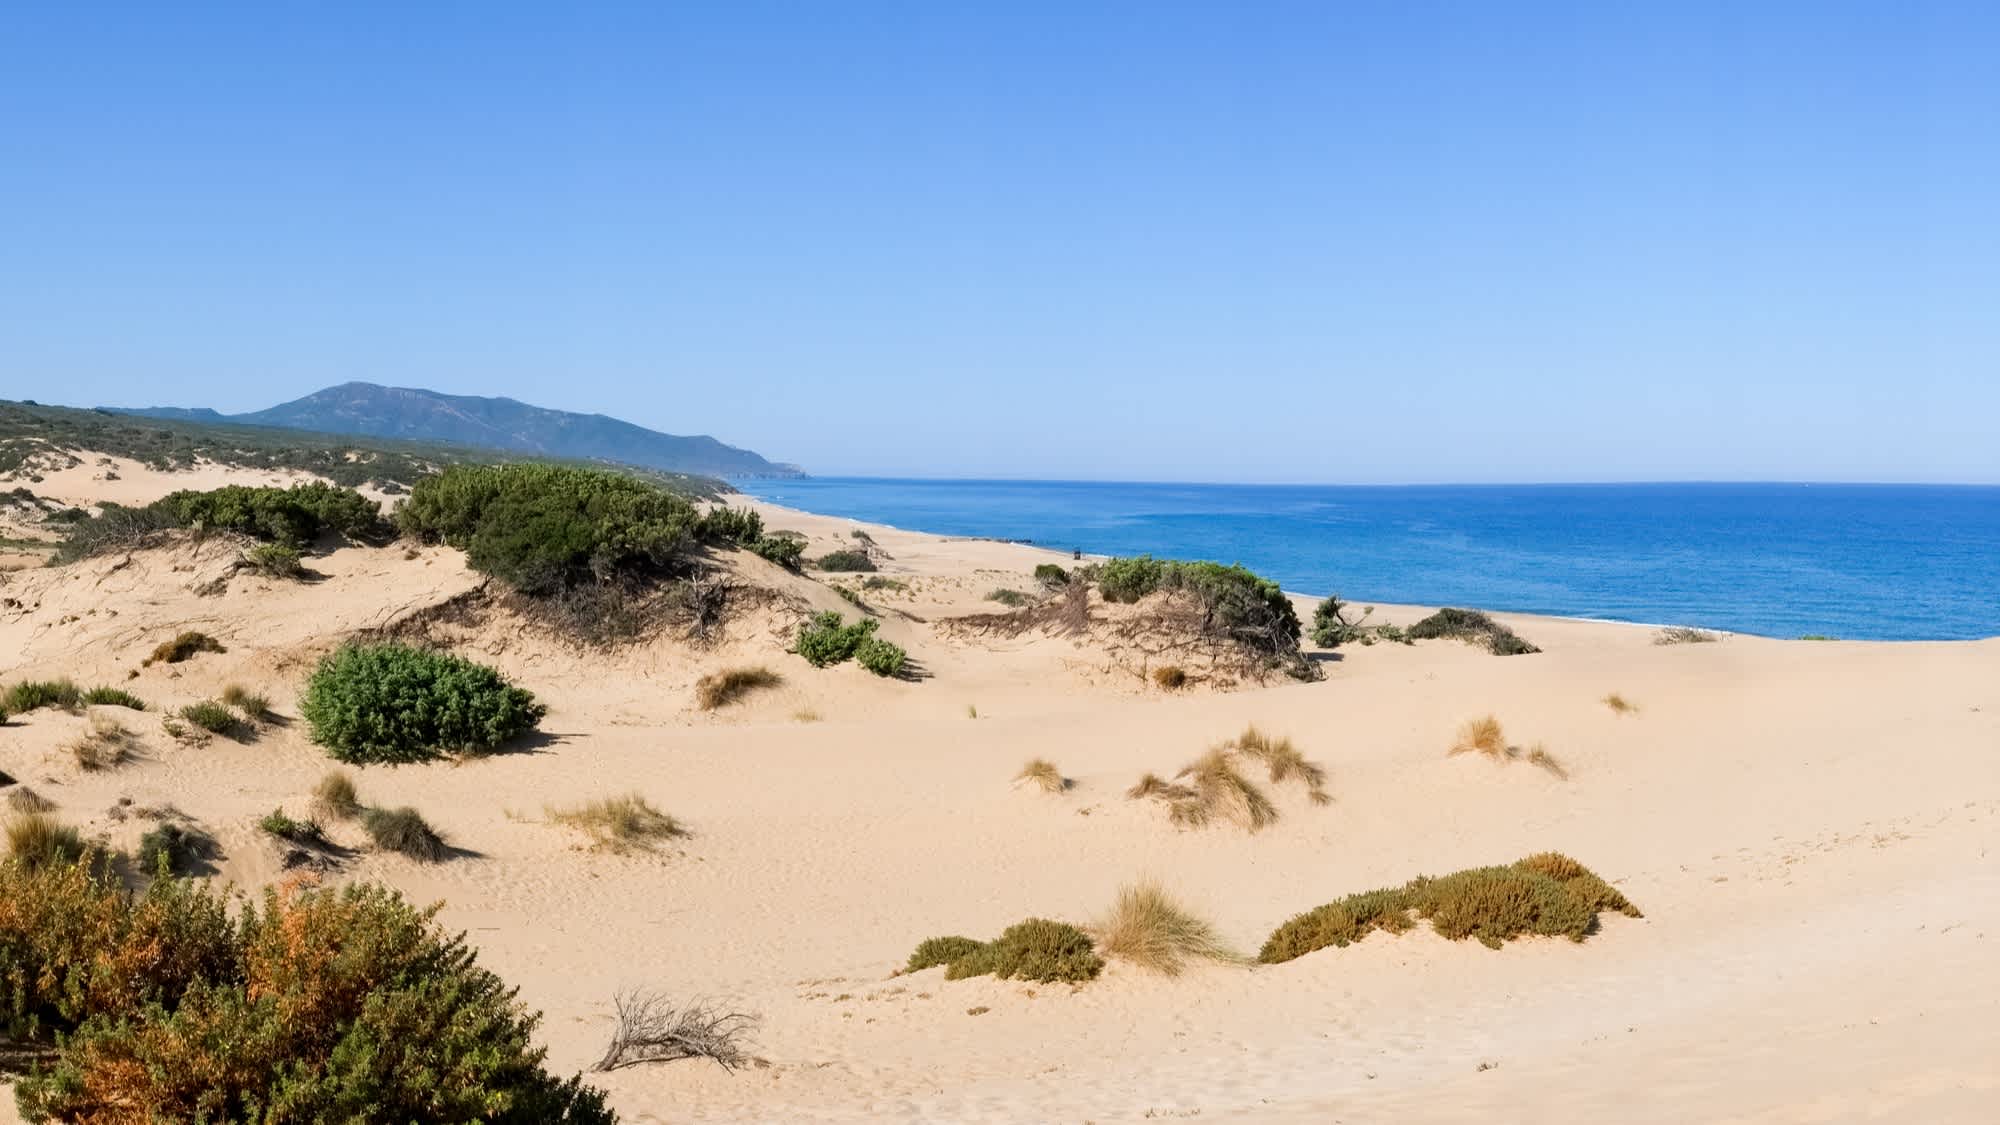 Dunes de sable sur la Costa Verde, Sardaigne occidentale, Italie

